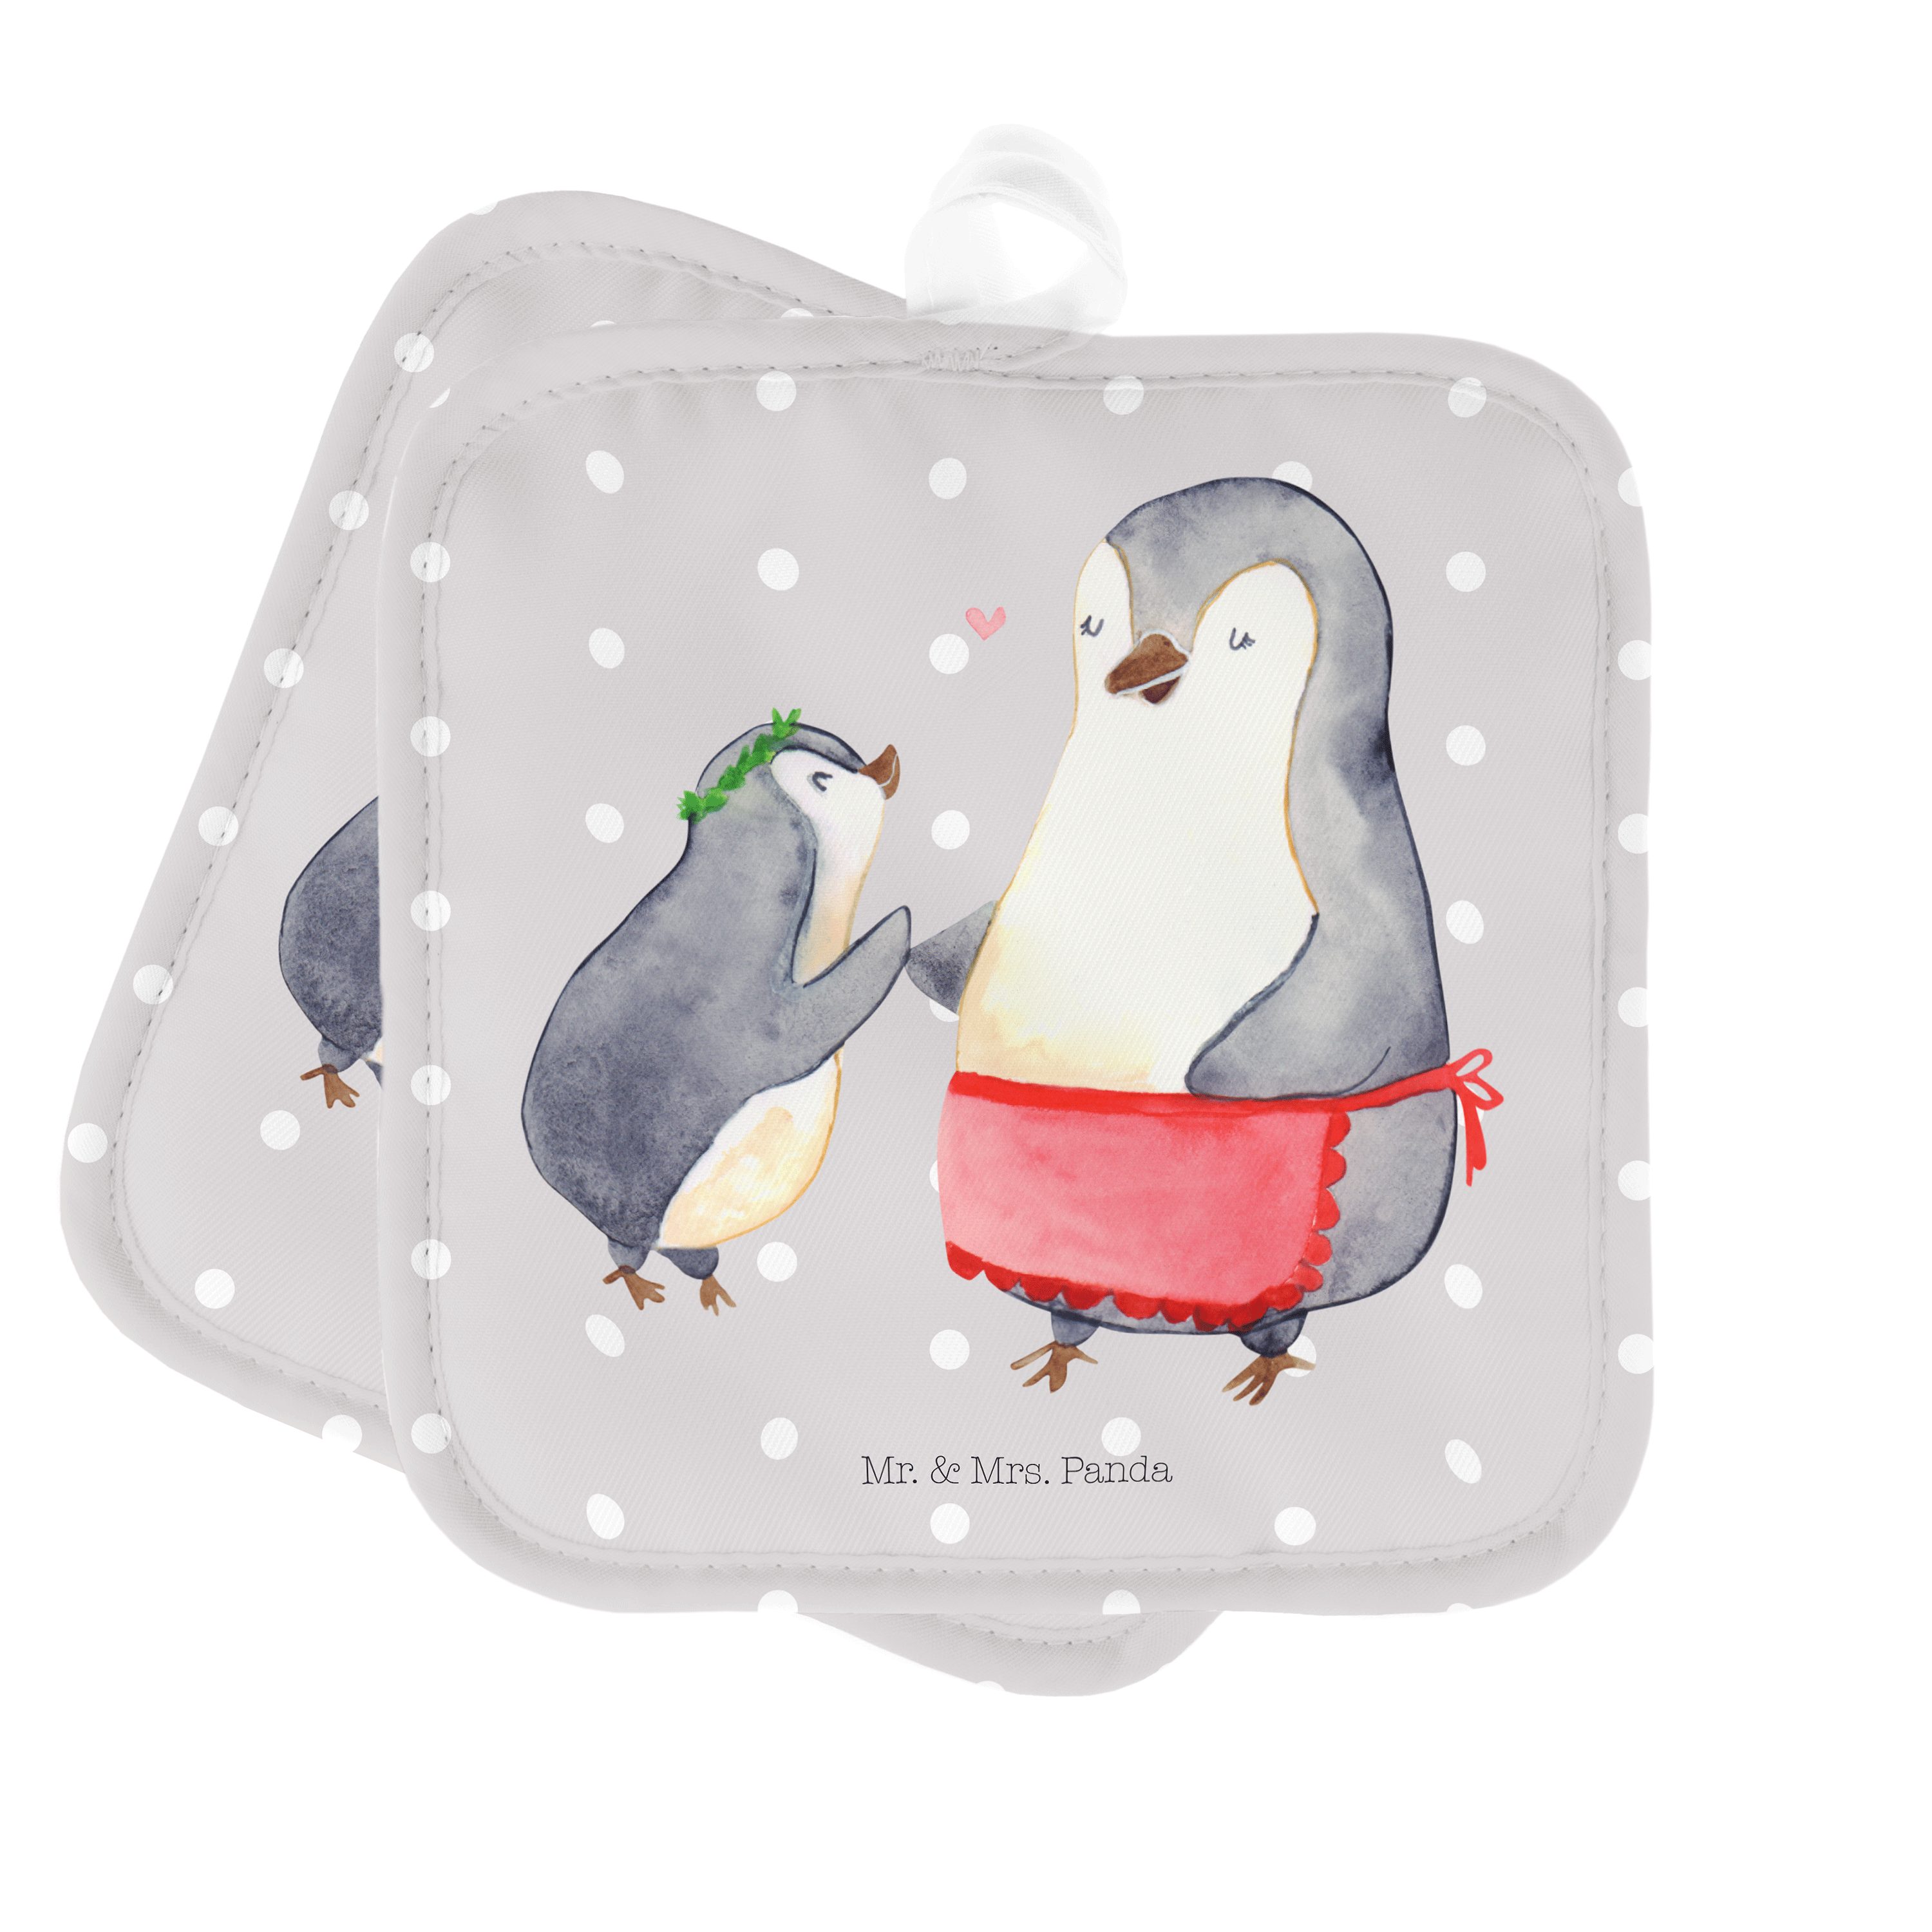 Mr. & Mrs. Panda Topfla, Topflappen Kind mit lustig, Pastell Topflappen - - Geschenk, Grau Pinguin (1-tlg)